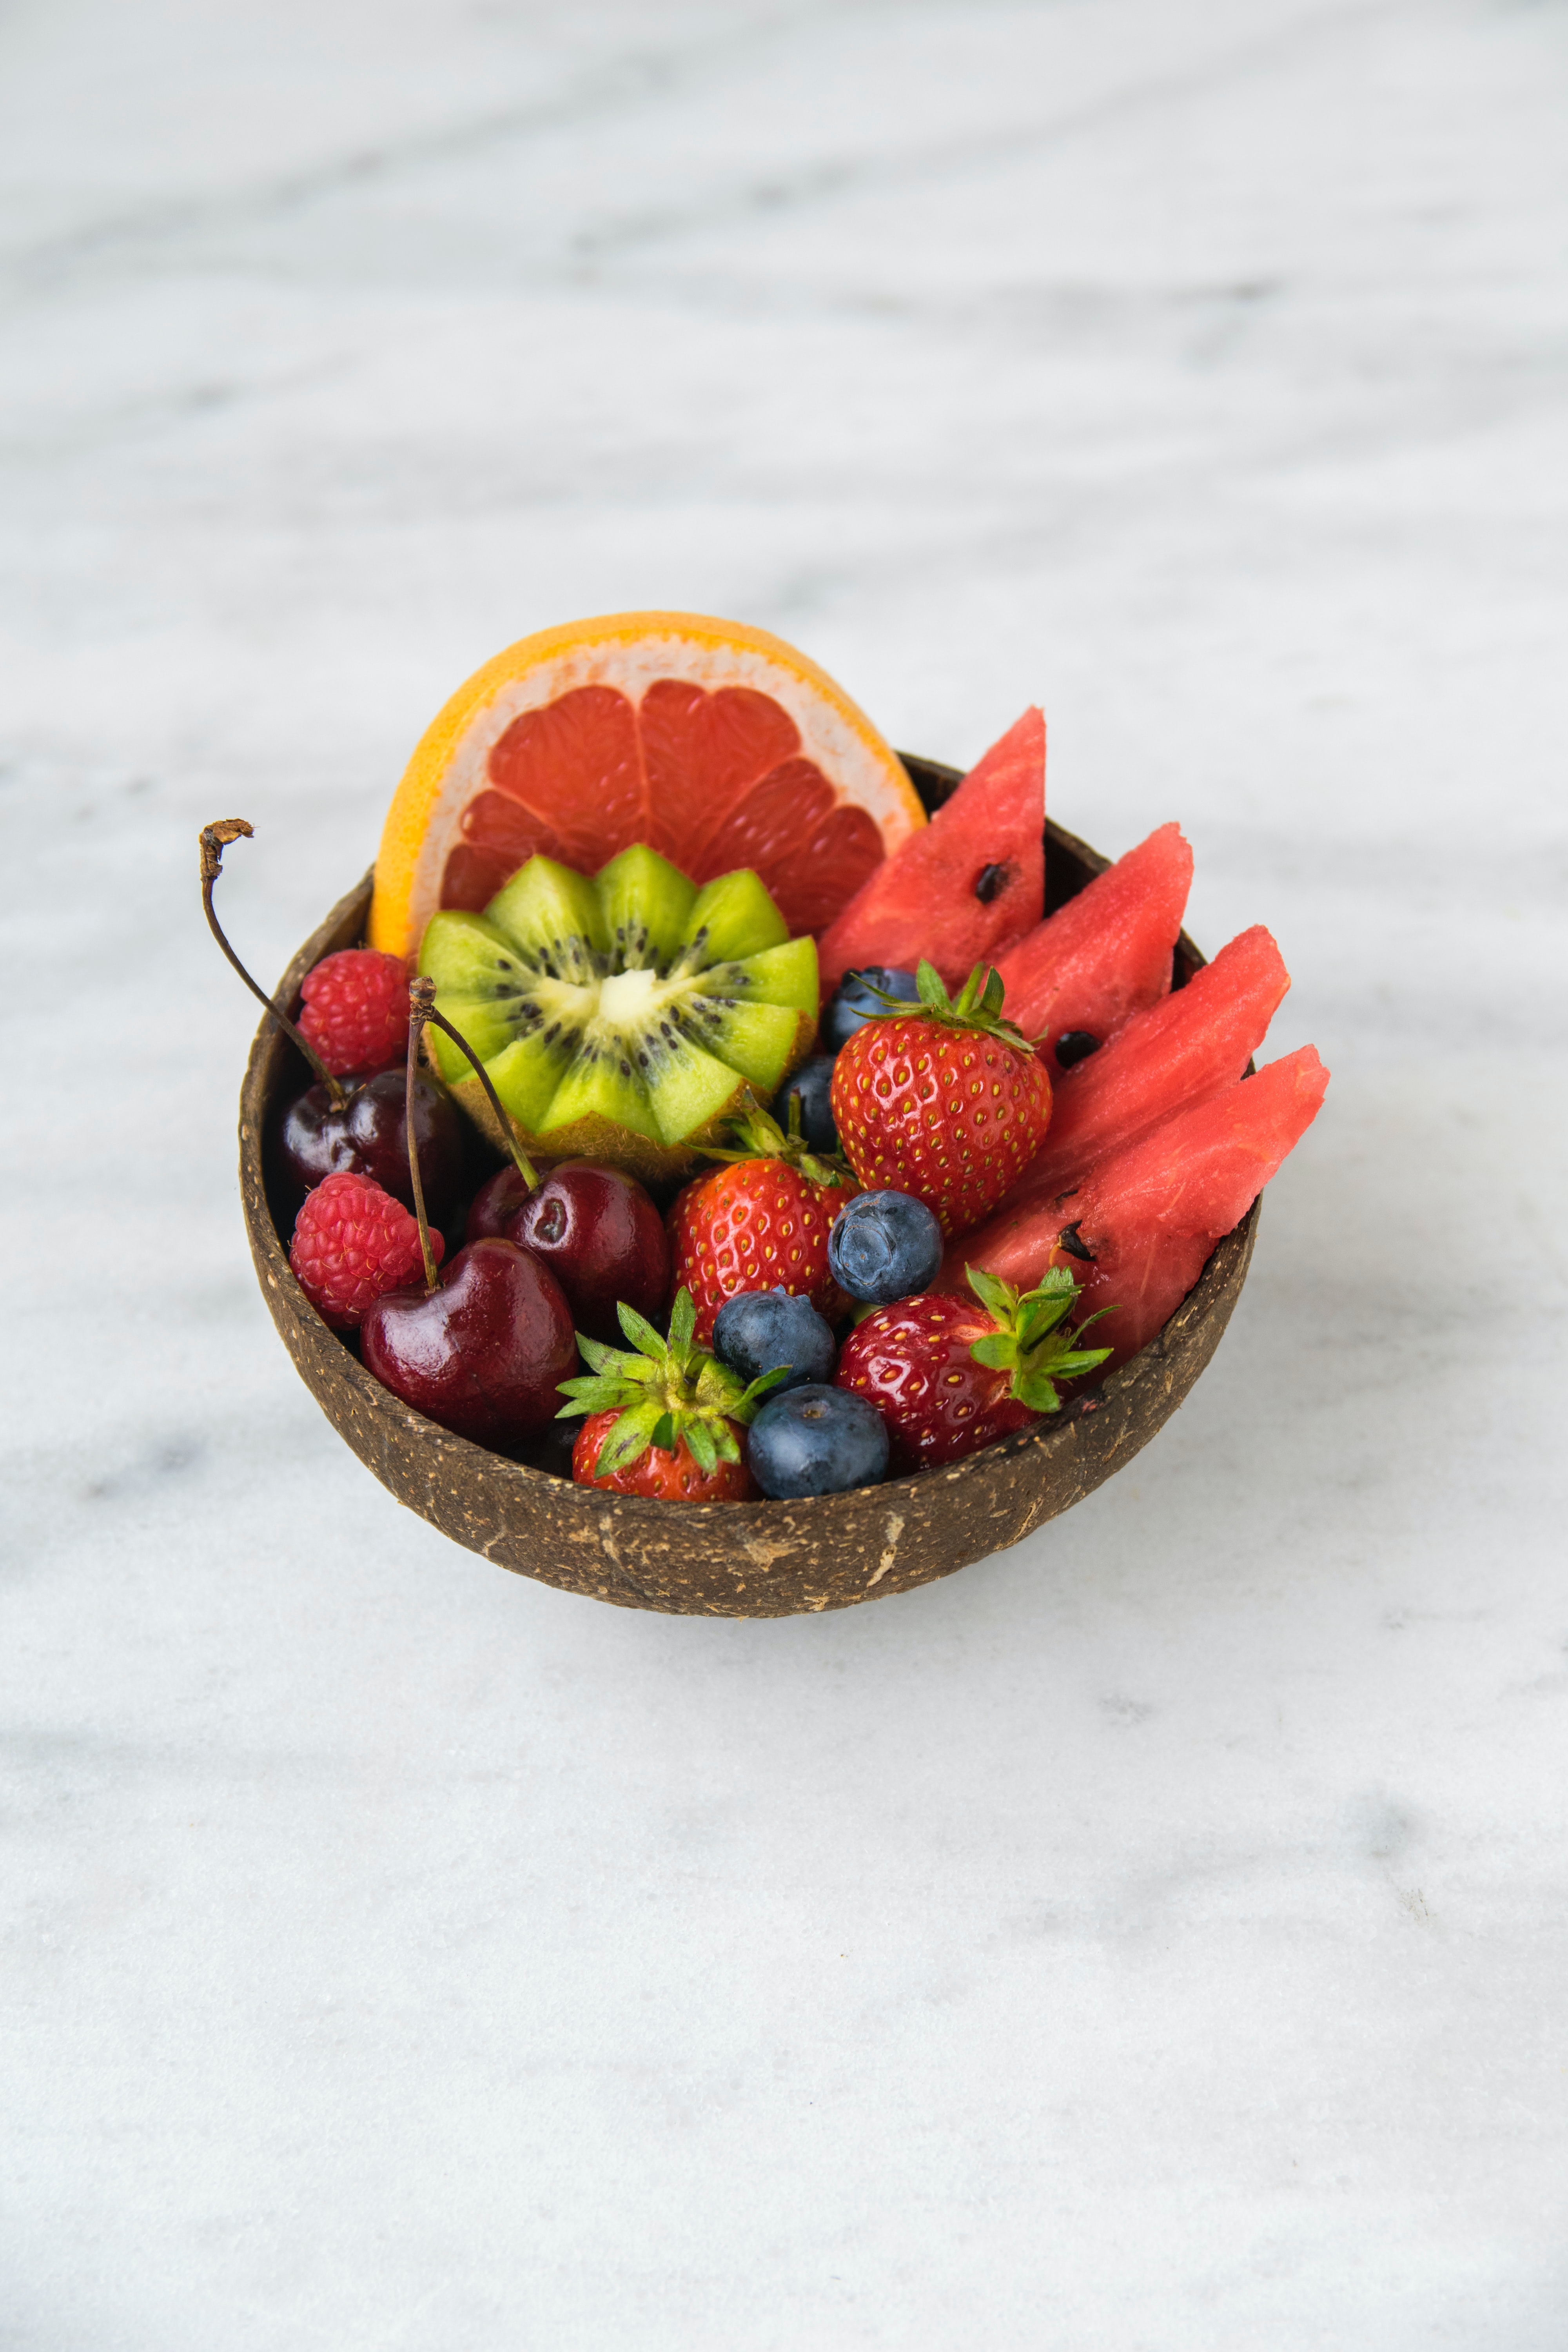 fruits, food, strawberry, cherry, kiwi, bilberries, berries, watermelon Image for desktop